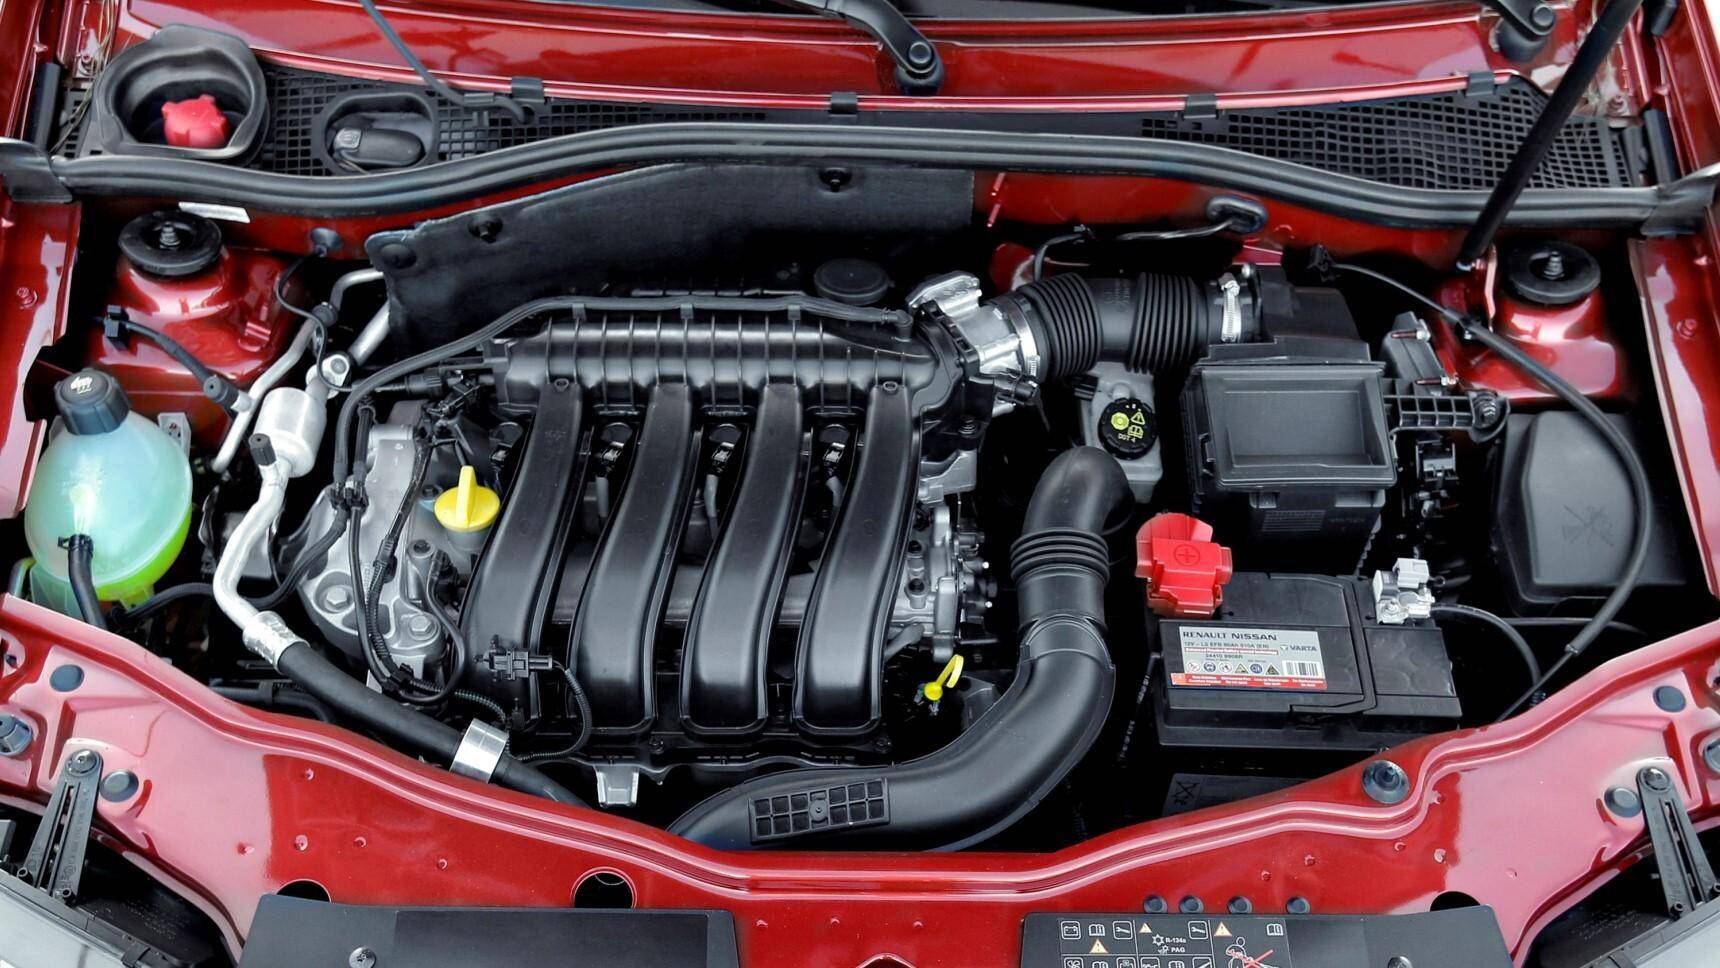 F4r двигатель renault duster: ремонт, модификации 410/rt/f/a400/m, технические характеристики мотора на 2 литра, масло, проблемы, ресурс, отзывы, номер